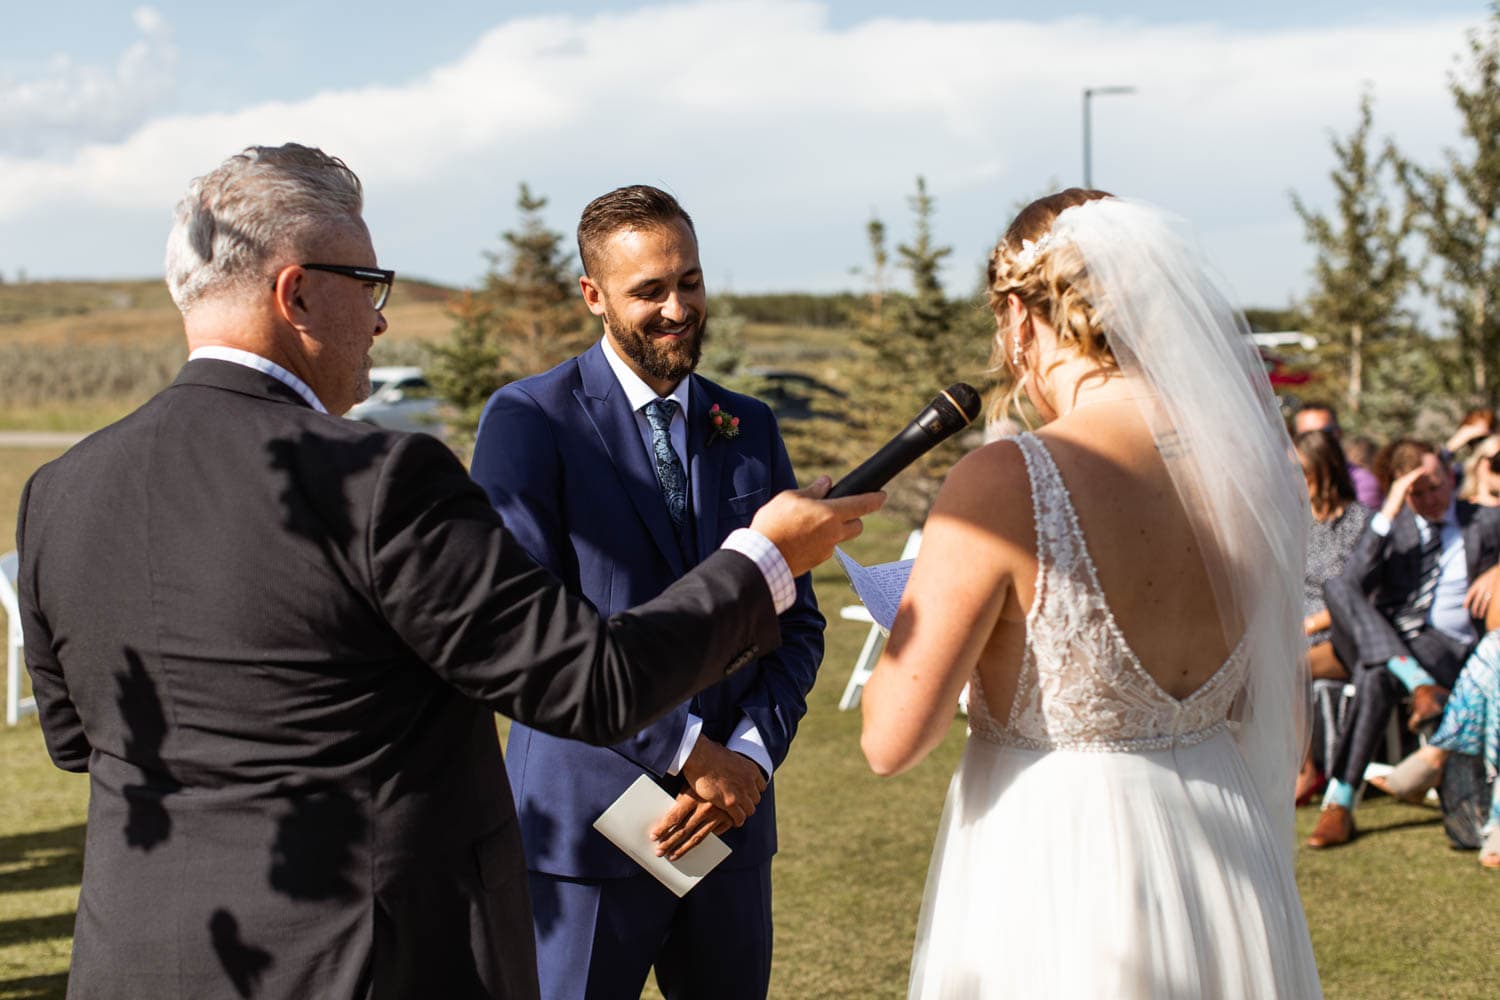 bride giving vows at wedding ceremony